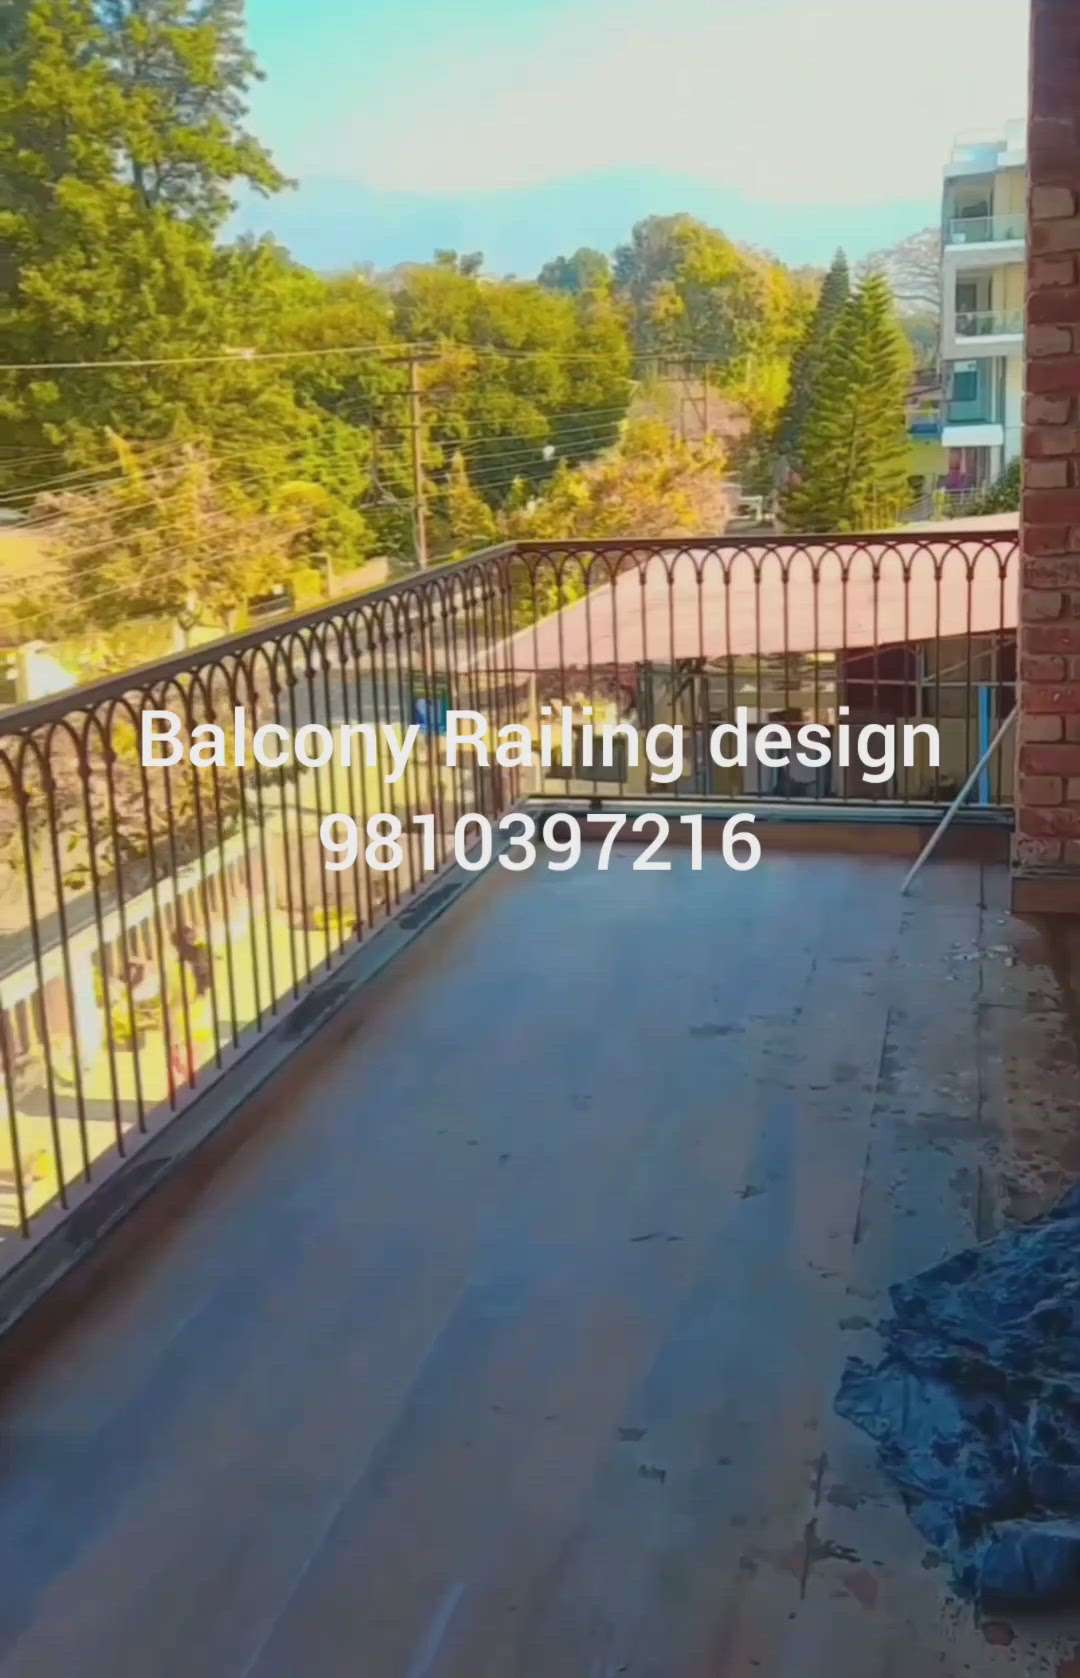 Balcony Railing design by Hibza sterling interiors pvt ltd #gatelookcraft #Balconyrailing #Railing #railingdesign #maingates